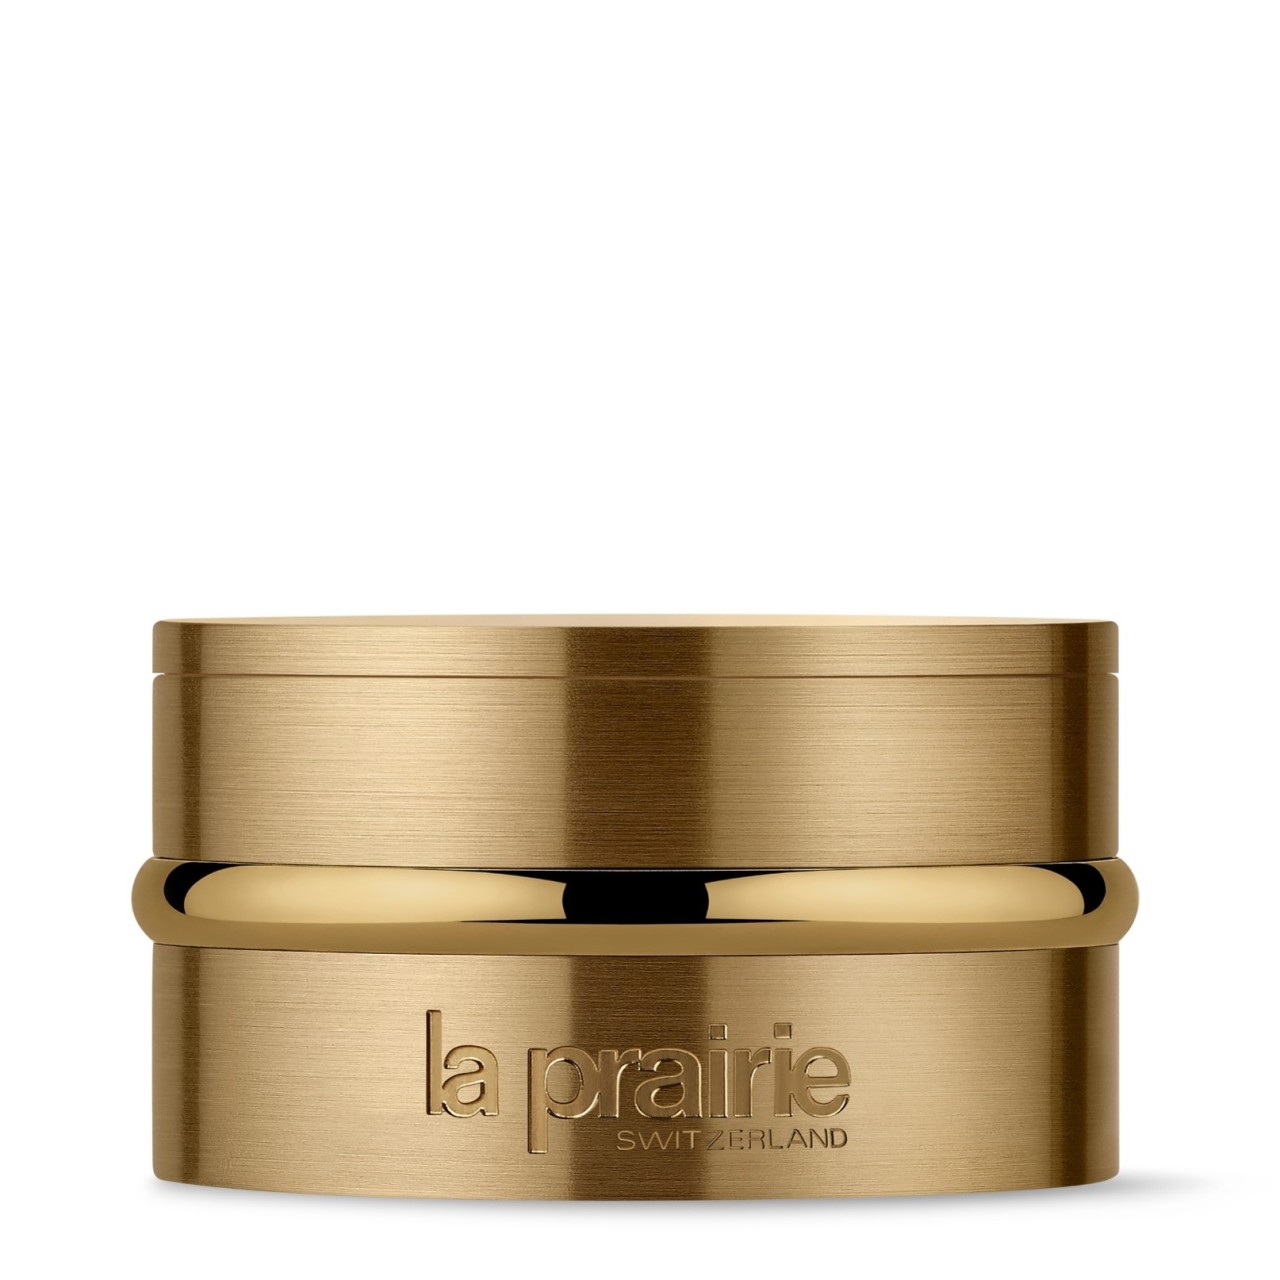 La Prairie - Pure Gold Radiance Nocturnal Balm - 